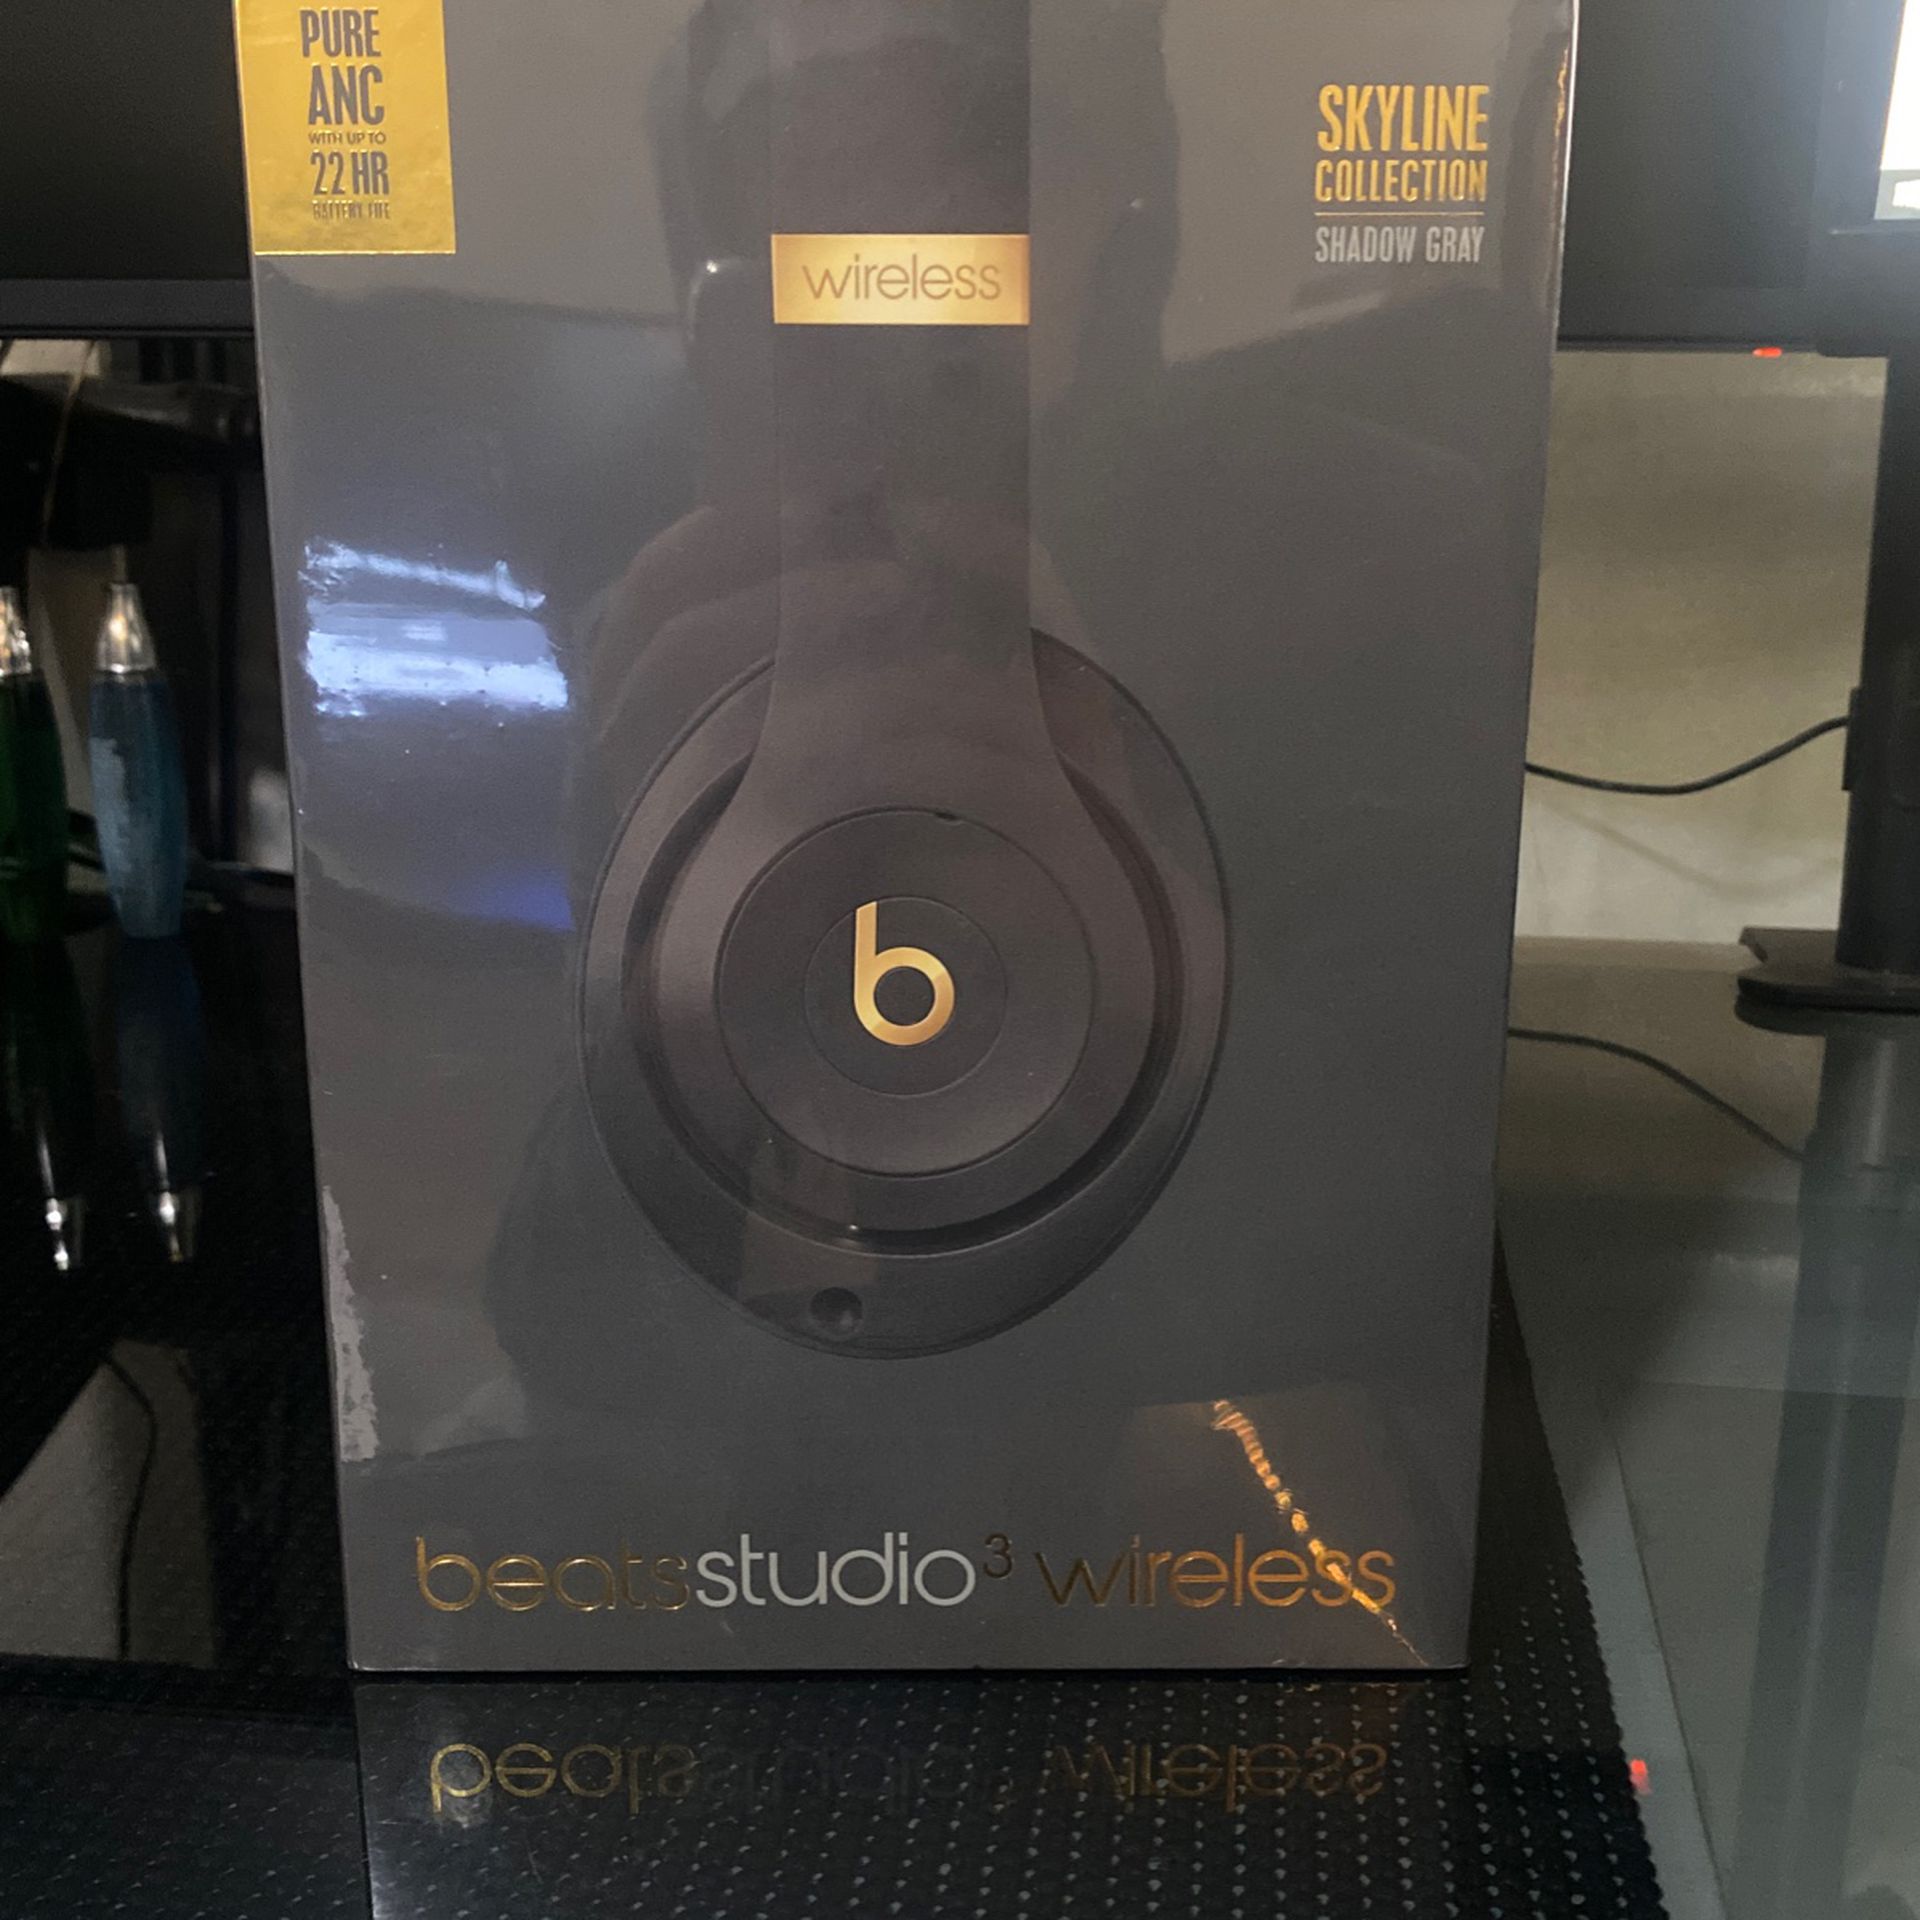 Beats Studio 3 Wireless